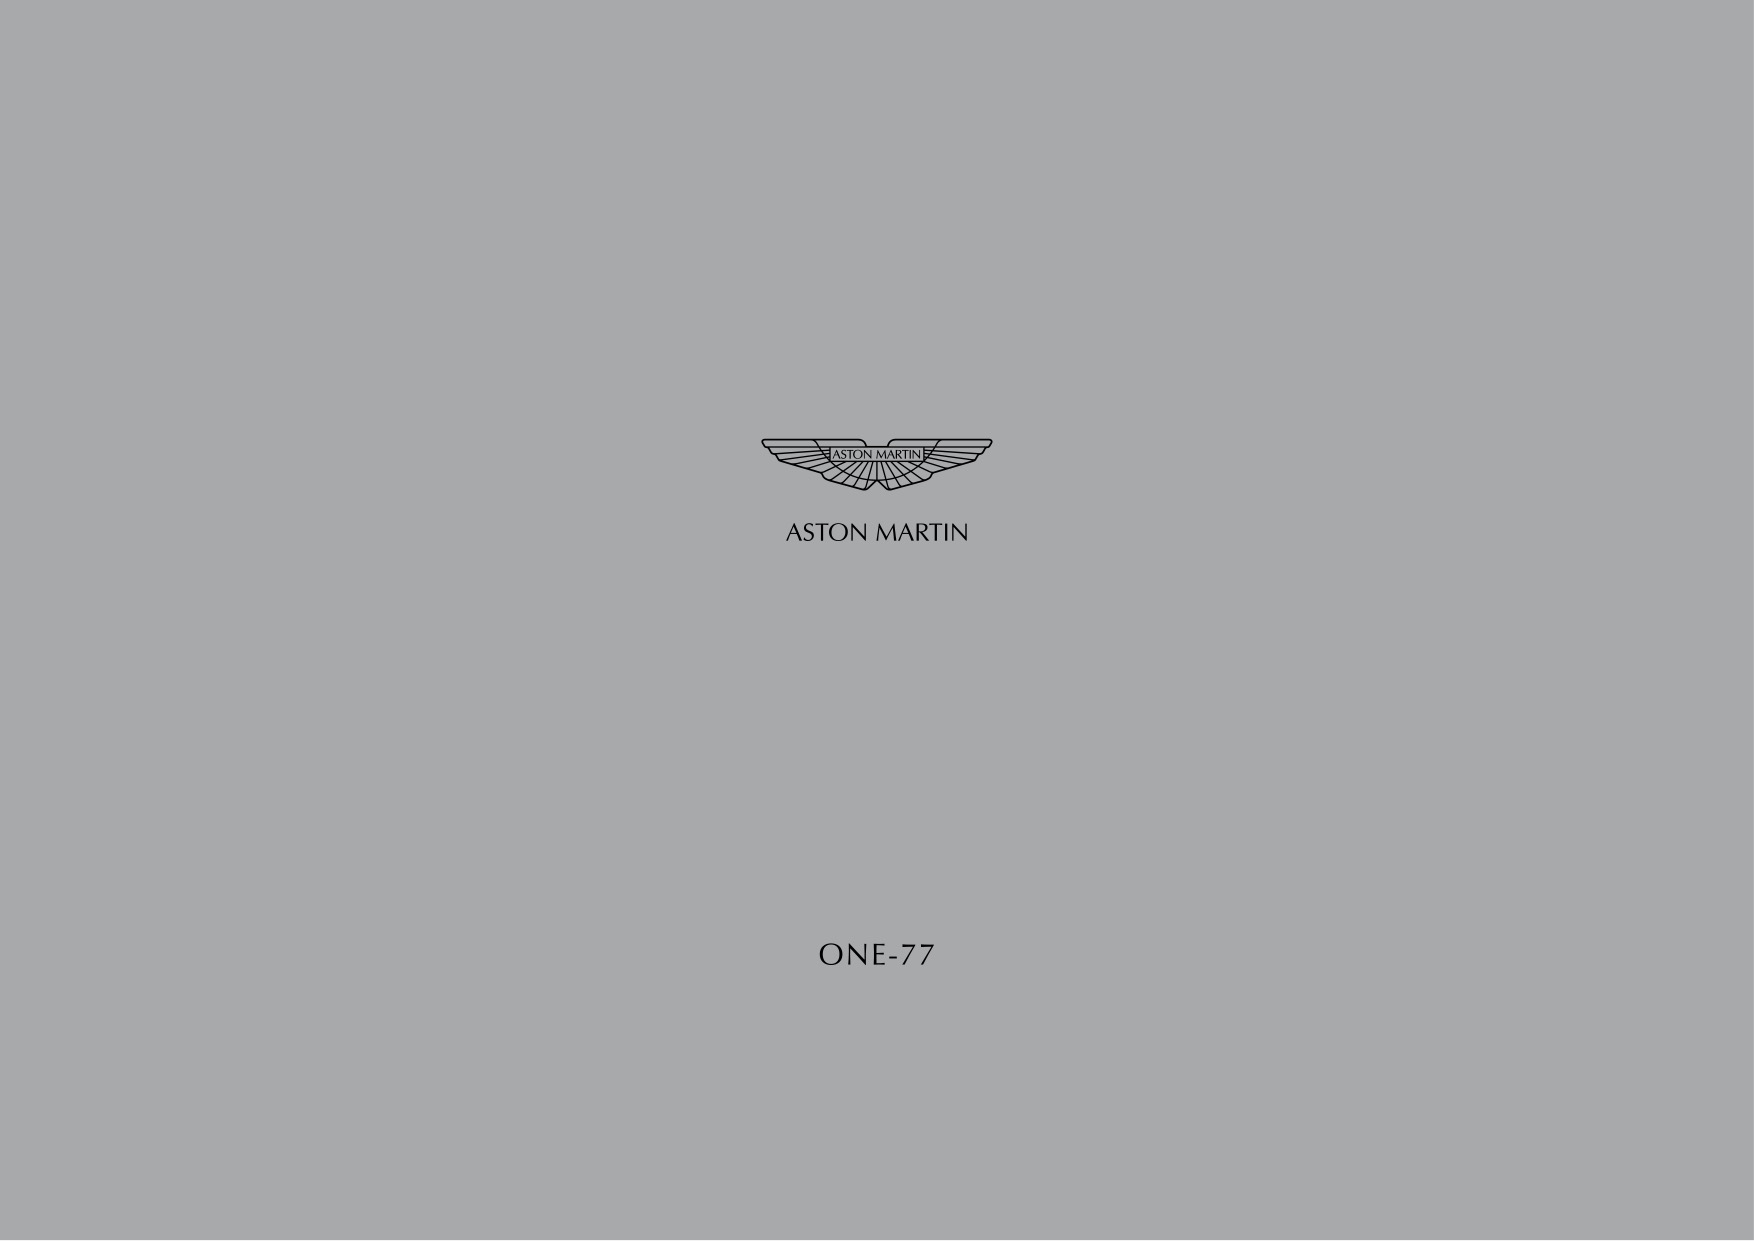 2012 Aston Martin One-77 Brochure